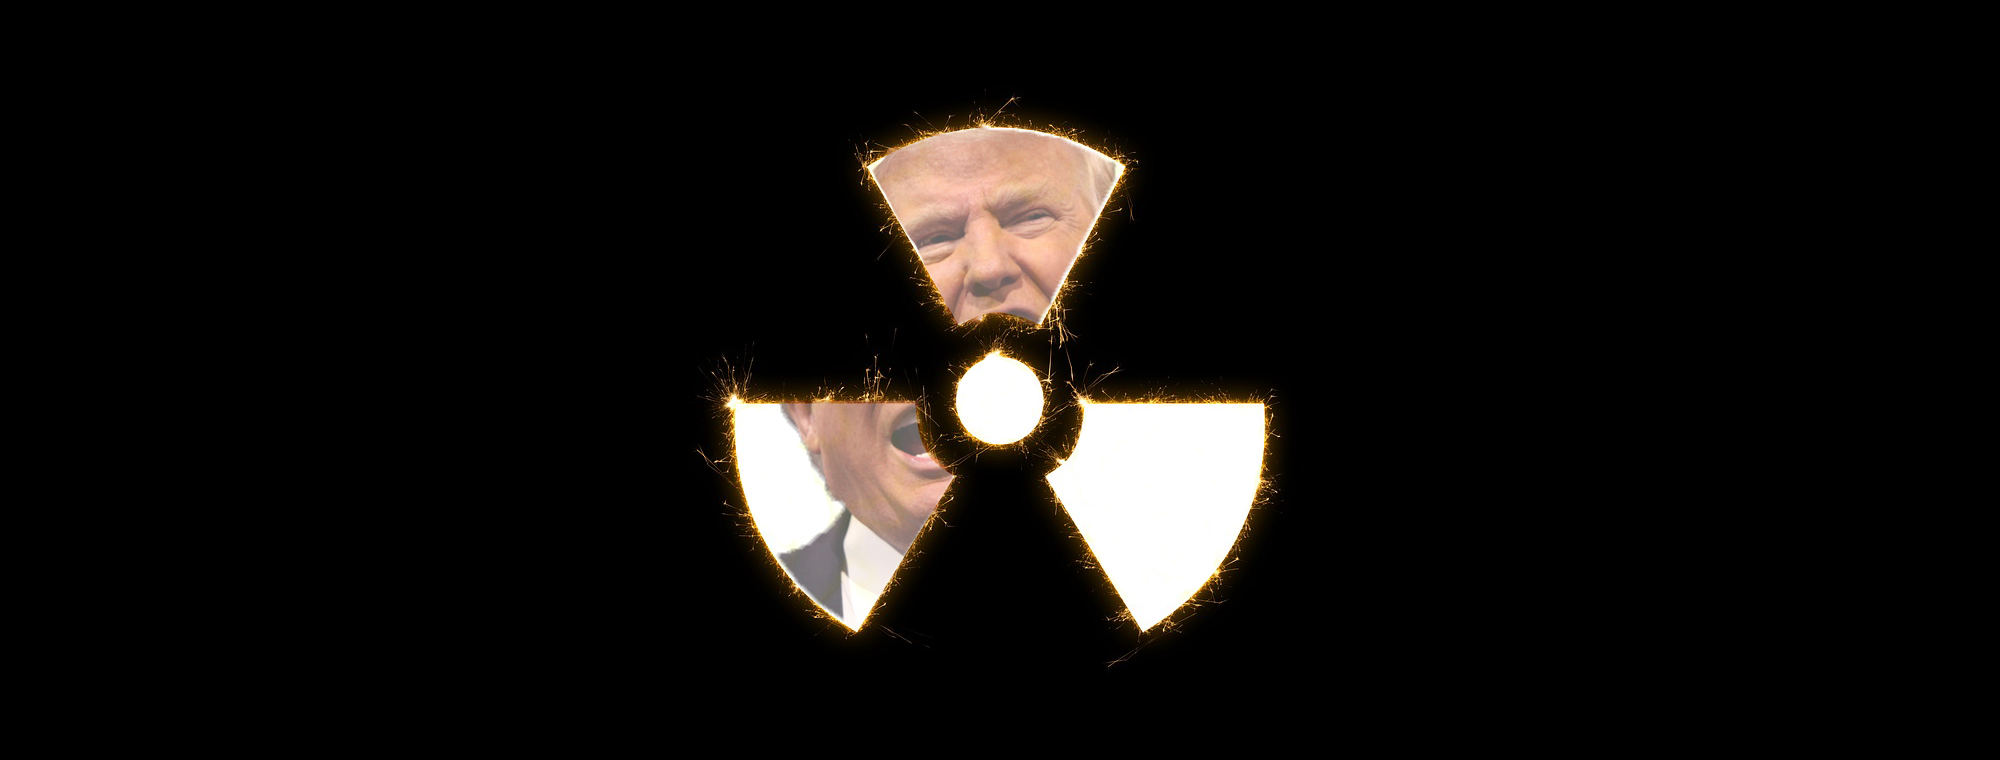 President Trump and radioactive hazard composite image